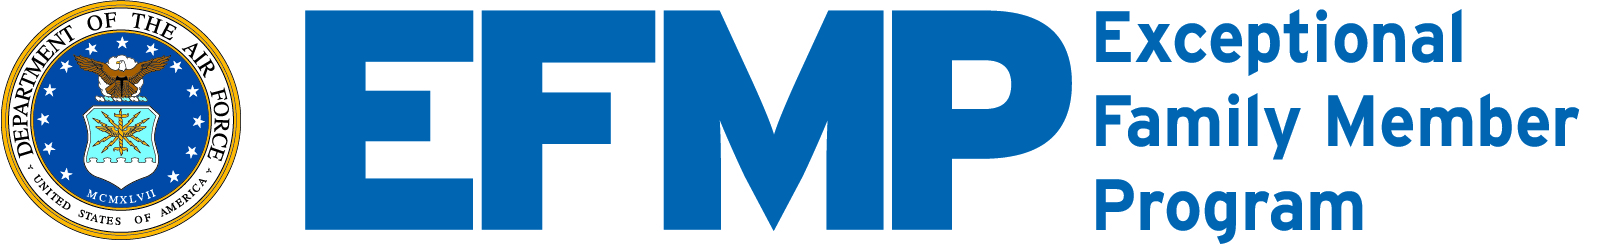 Exceptional Family Member Program (EFMP) logo